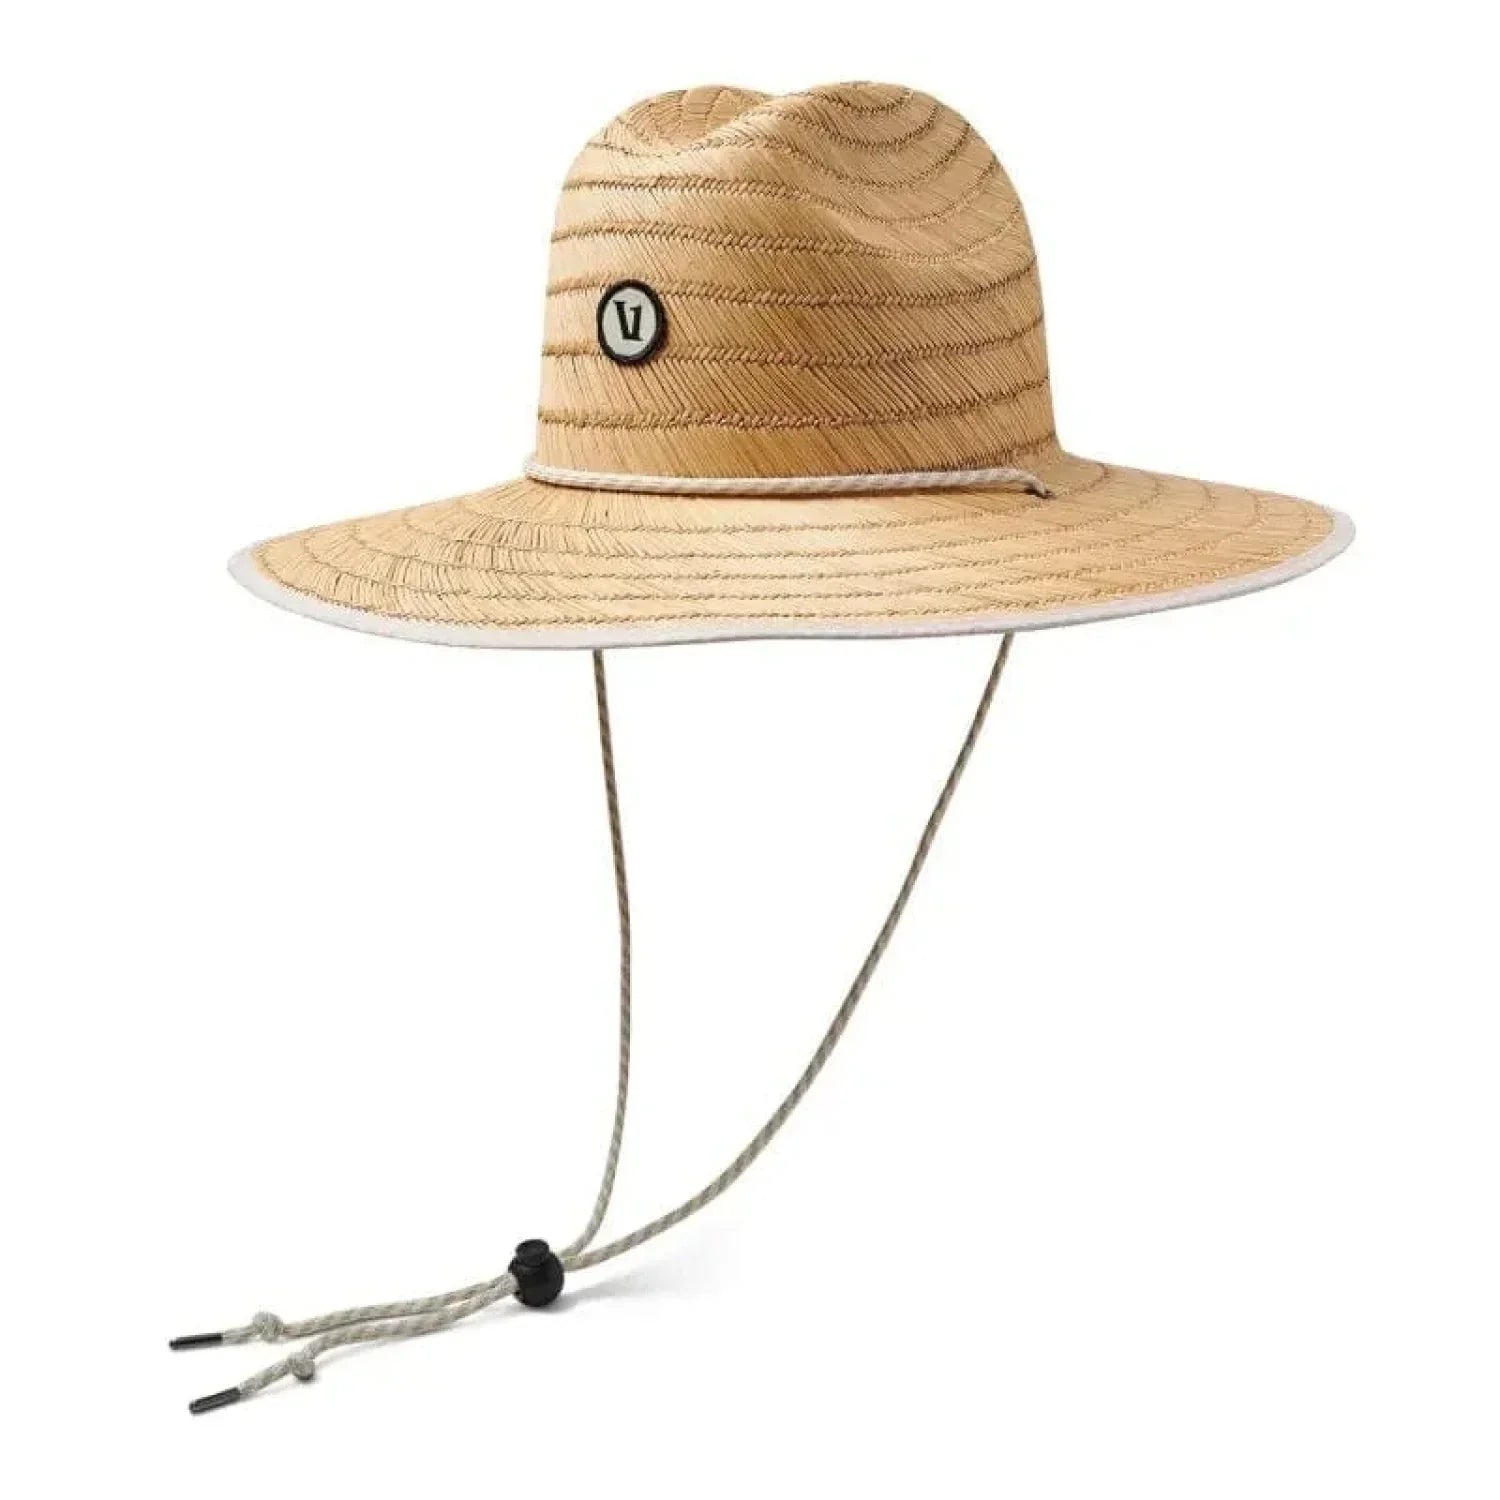 Vuori HATS - HATS BILLED - HATS BILLED Beacons Lifeguard Hat SSA SALT SAMBA One Size